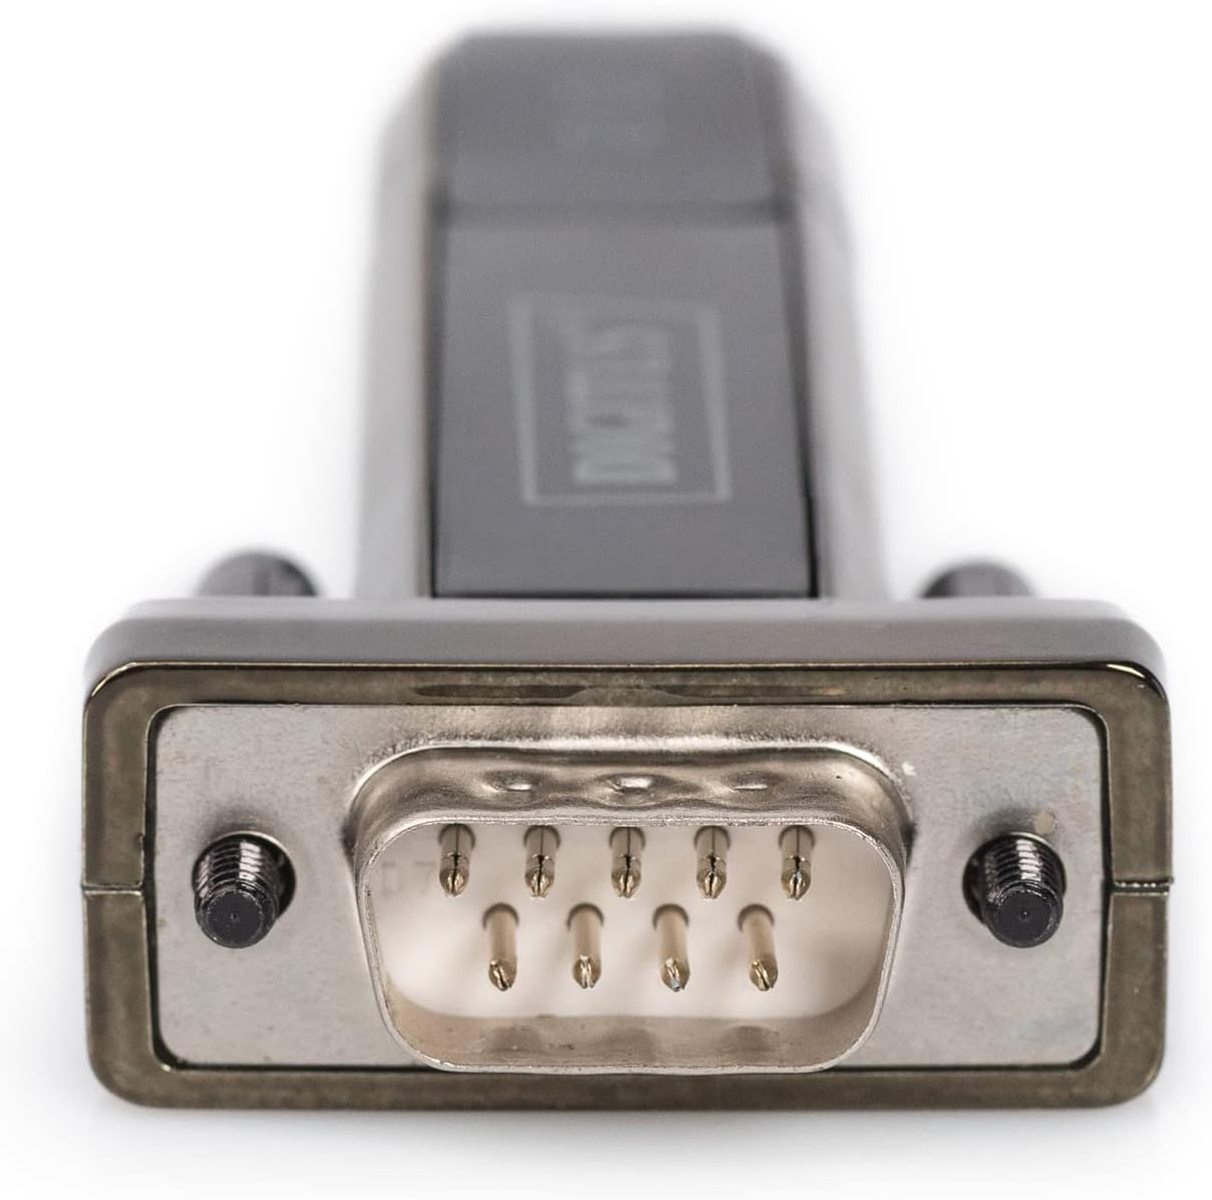 USB Kabel, DIGITUS DA-70156 Schwarz